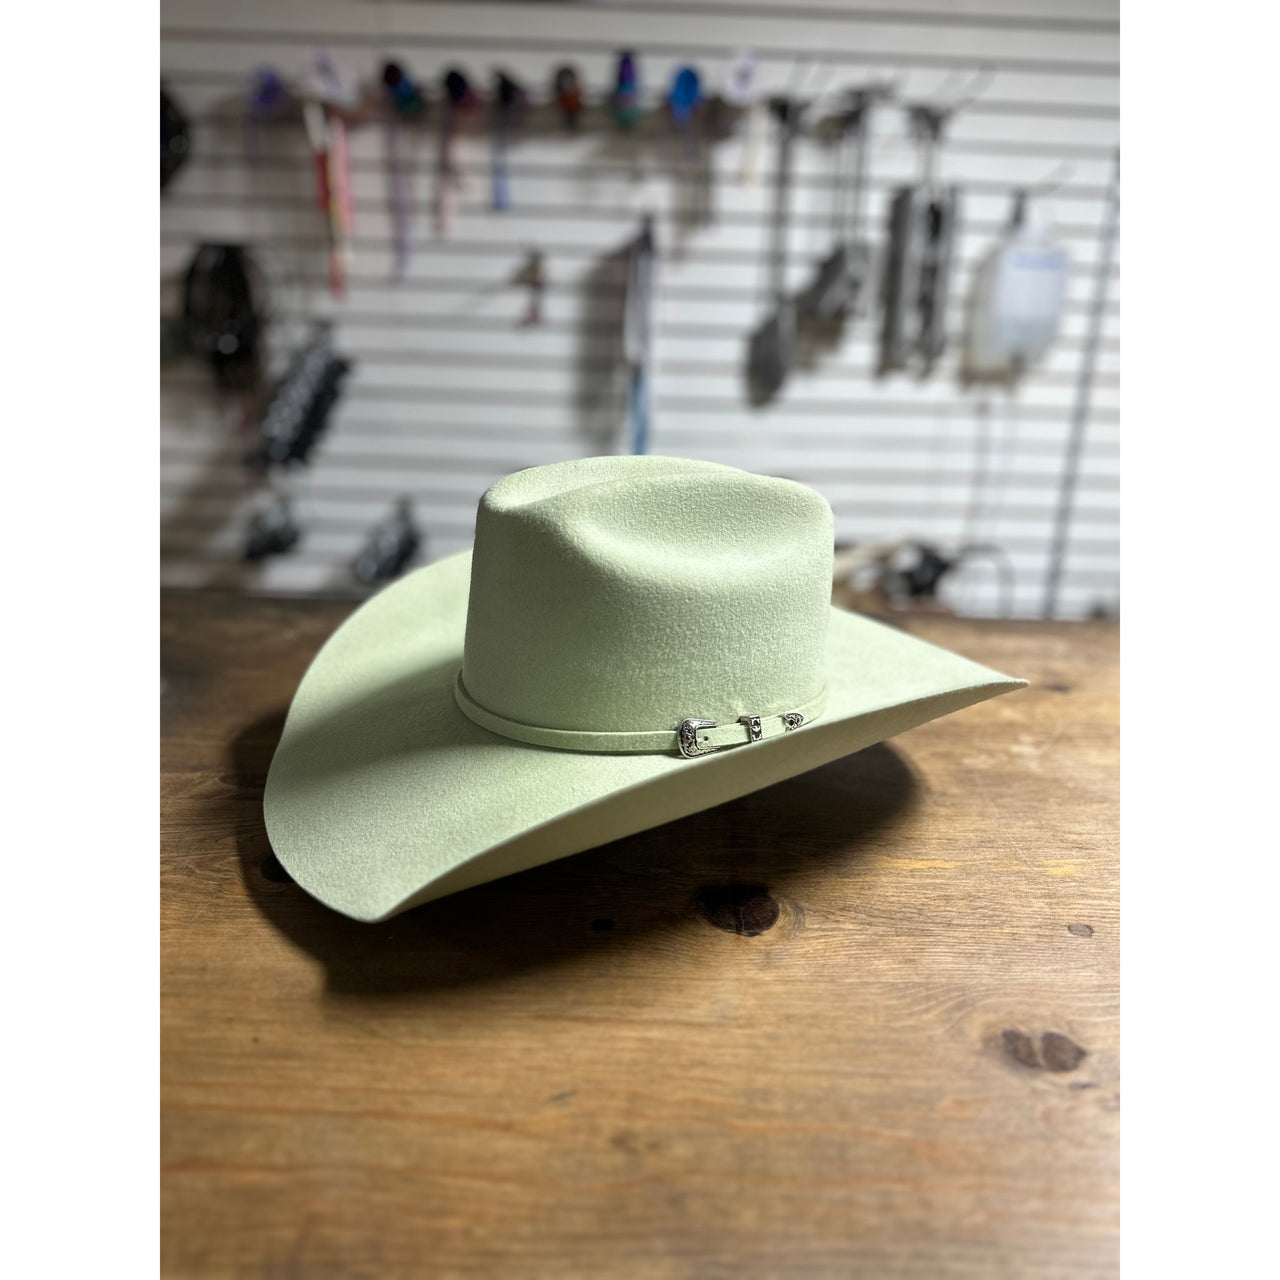 Prohat  Wool Felt Precreased Houston Western Hat - Olive